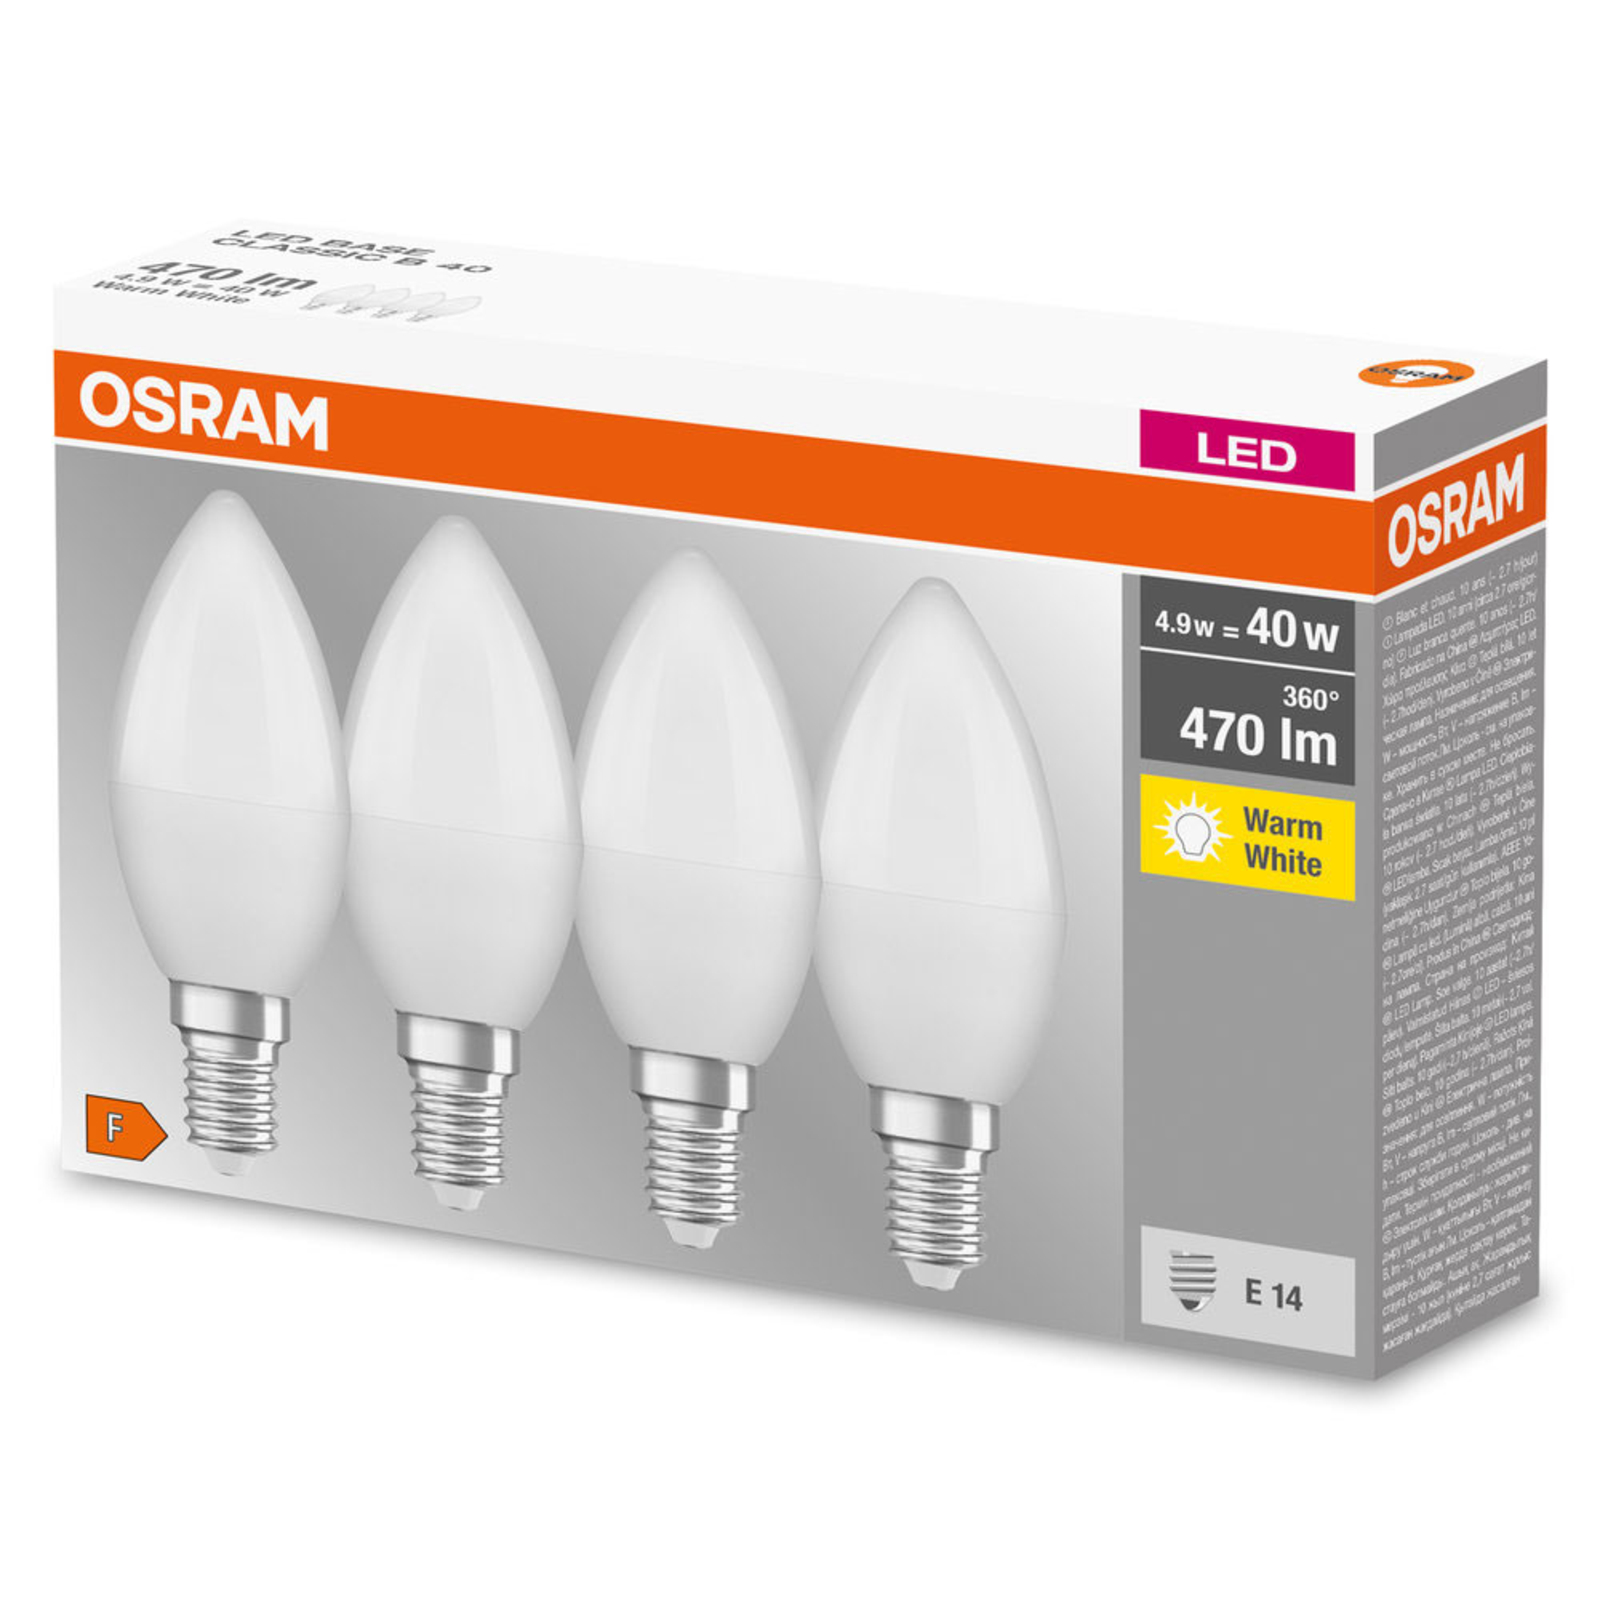 OSRAM LED sviečka E14 Base retro 4,9W 4 ks 2 700K